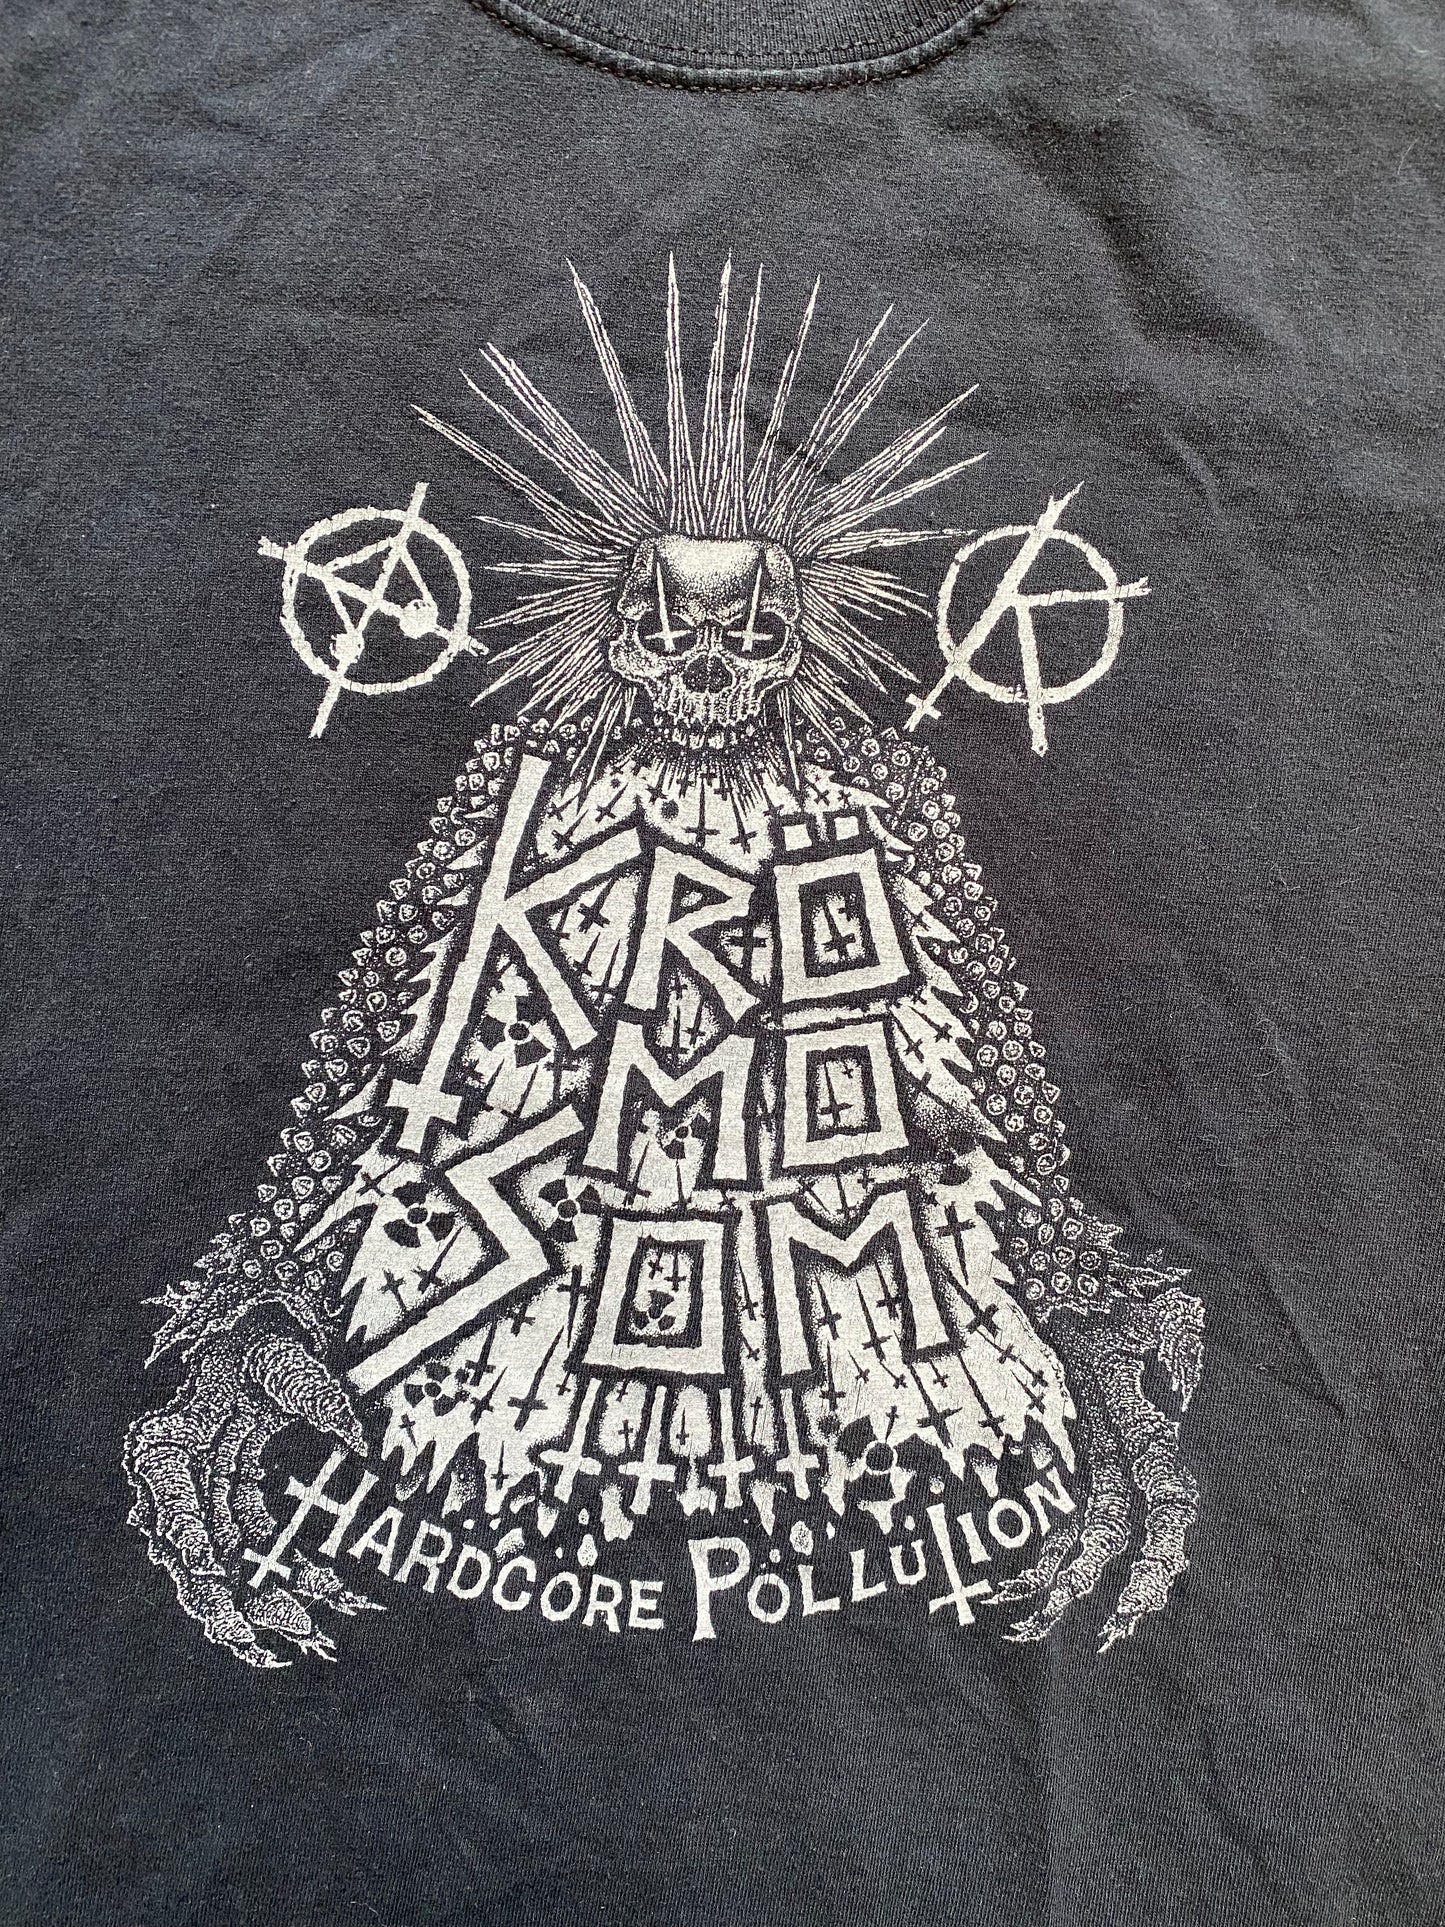 Kromosom “Hardcore Pollution” T-Shirt